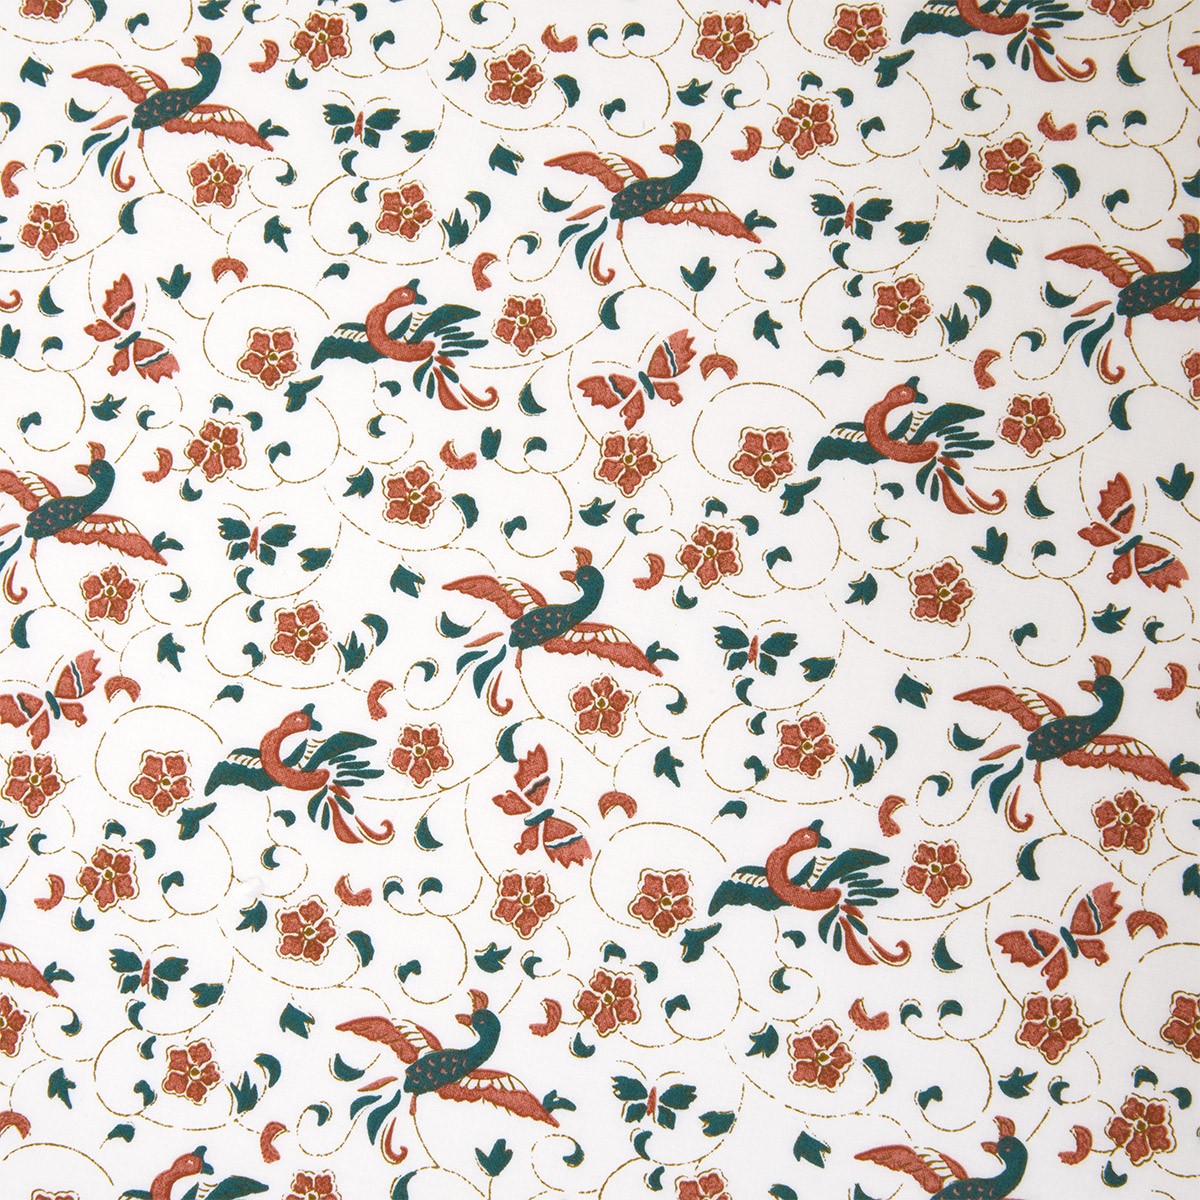 Bed Linen Golestan Multicoloured